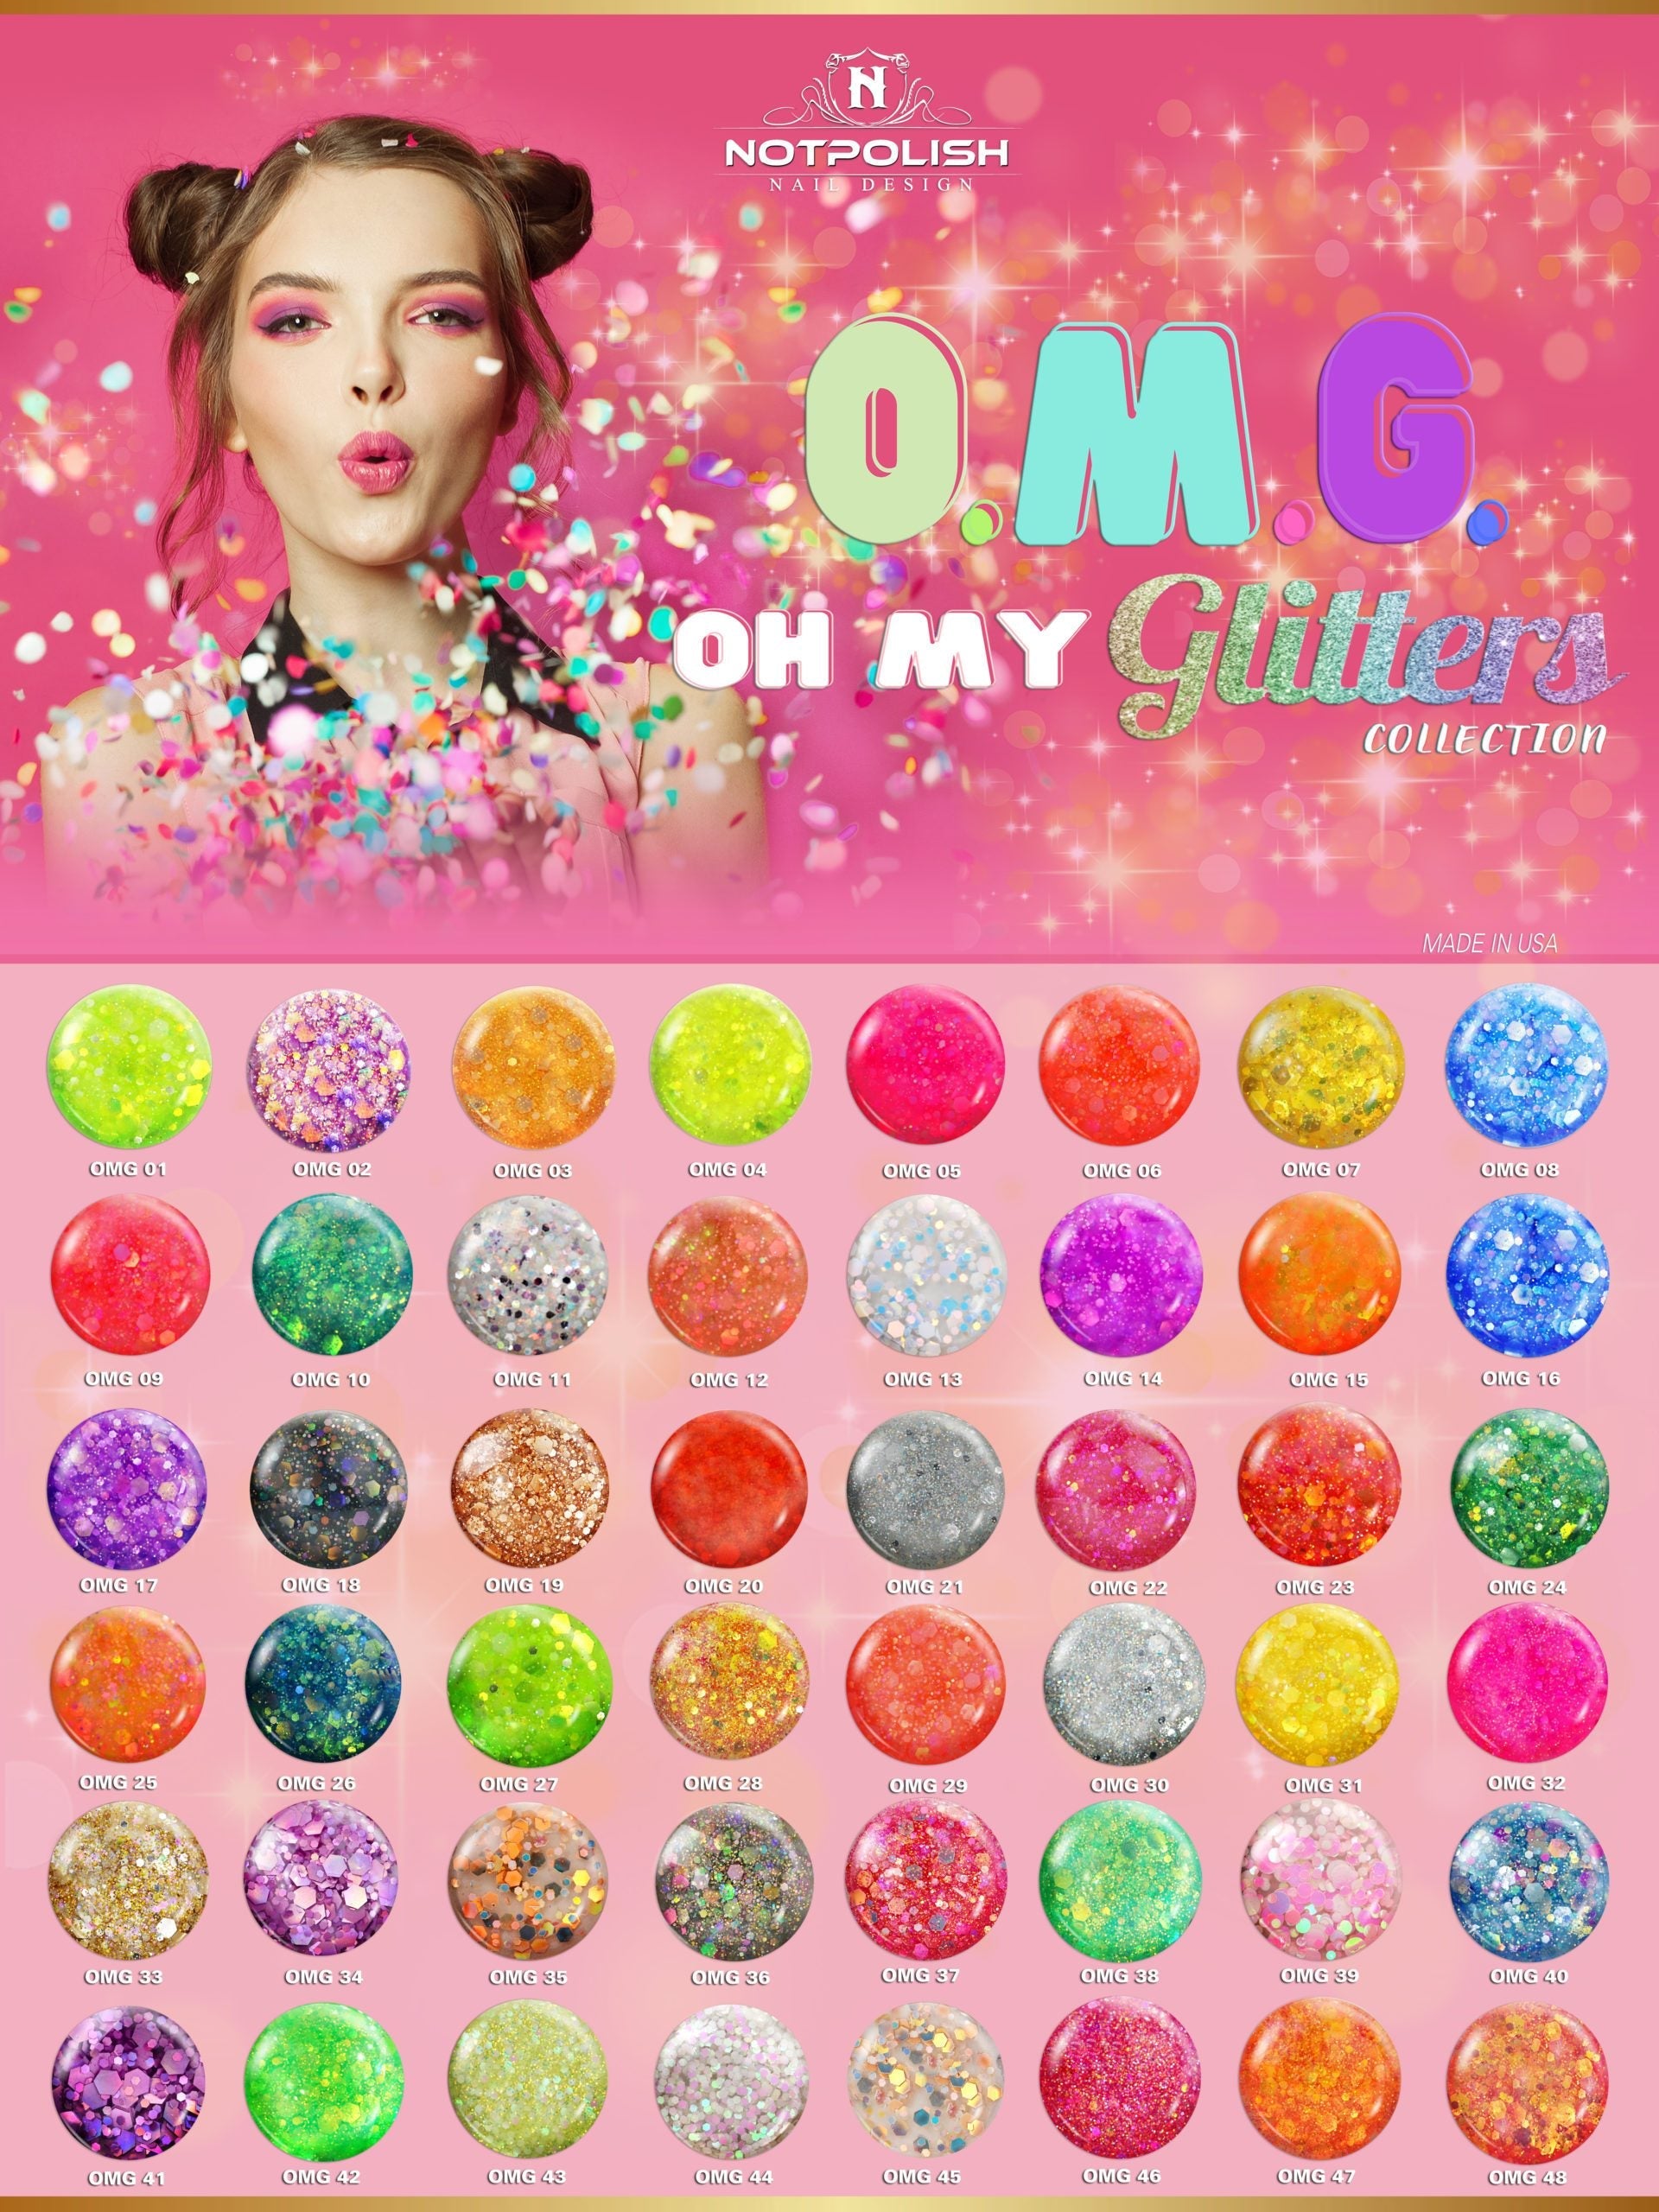 Notpolish 2-in-1 Powder (Oh My Glitter) - OMG26 - Stars Dance